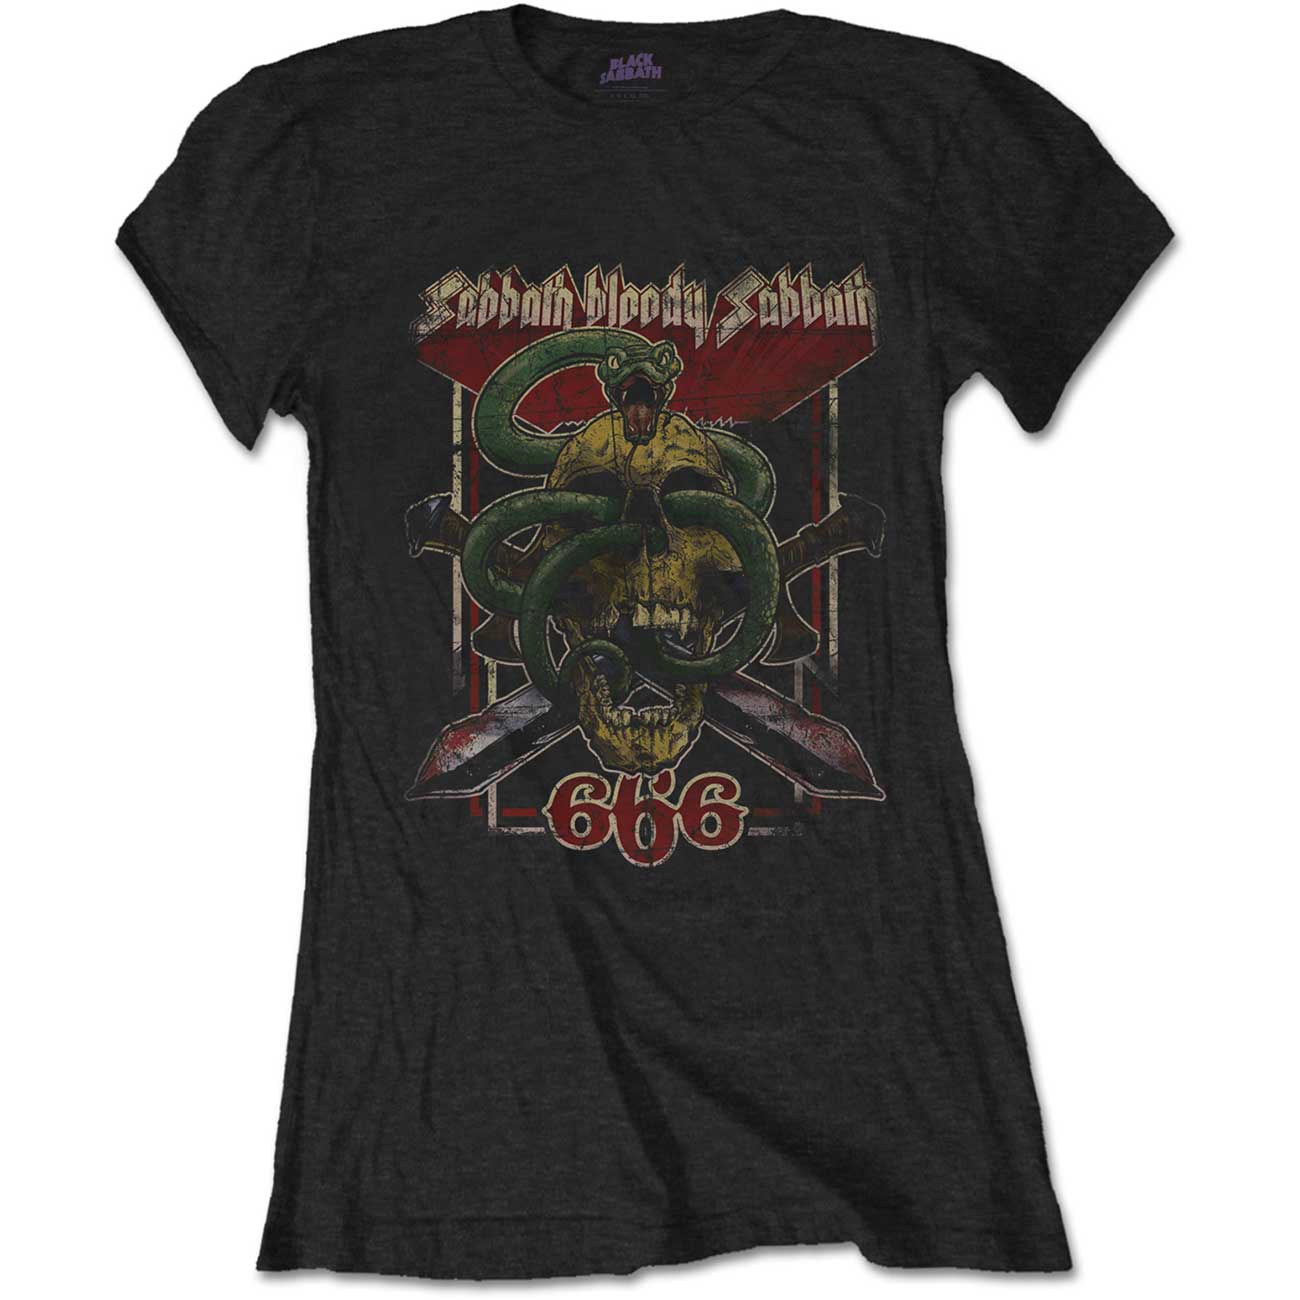 Black Sabbath Ladies T-Shirt: Bloody Sabbath 666